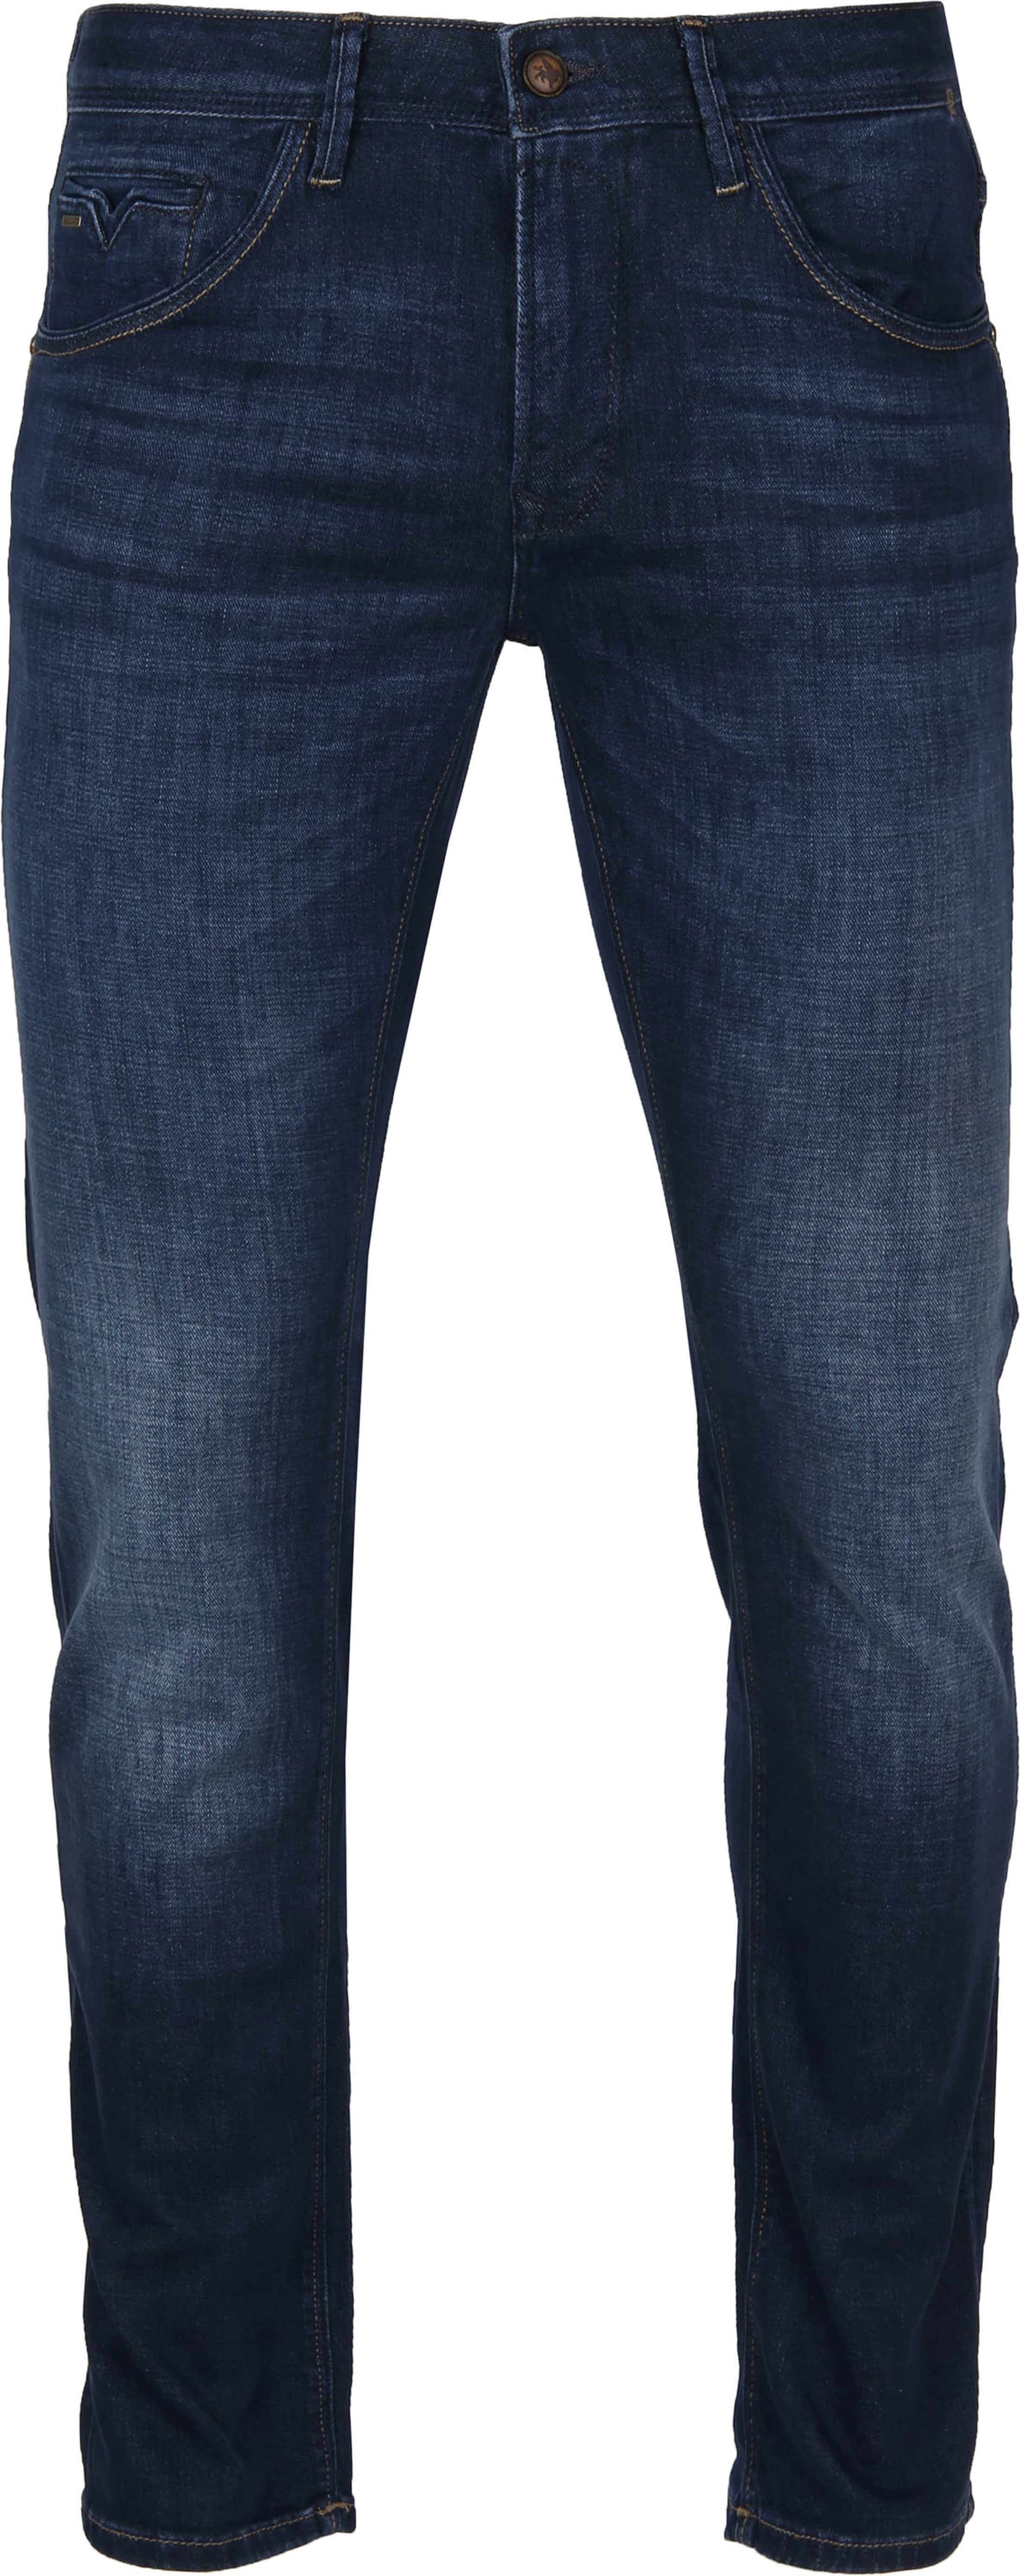 Vanguard V85 Scrambler Jeans SF Navy Dark Blue Blue size W 30